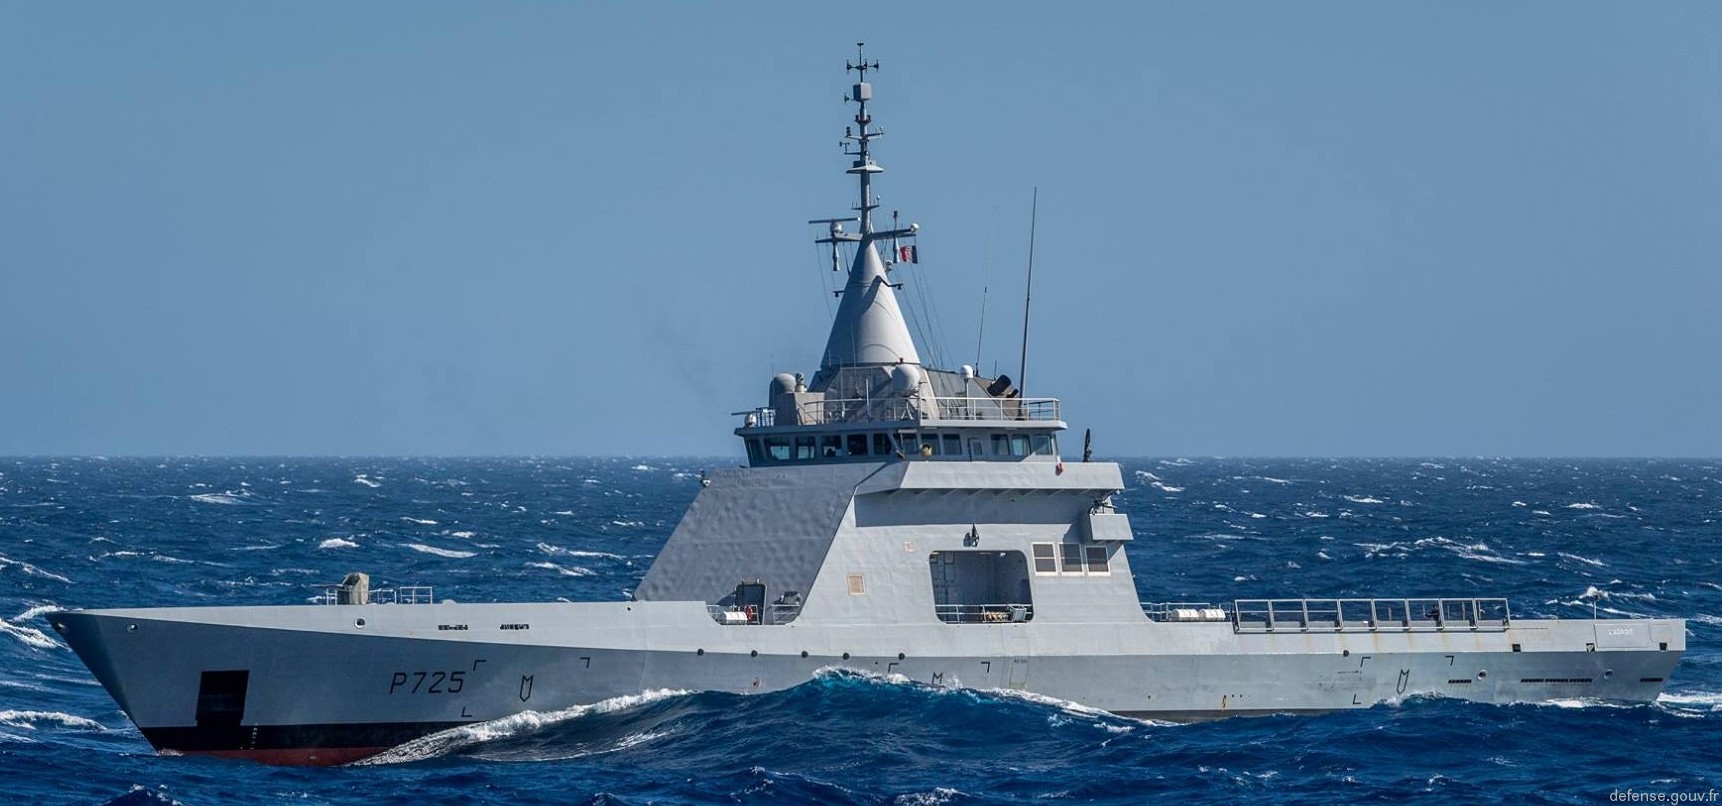 p-725 l'adroit offshore patrol vessel opv french navy patrouilleur hauturier marine nationale gowind dcns opv-90 03x